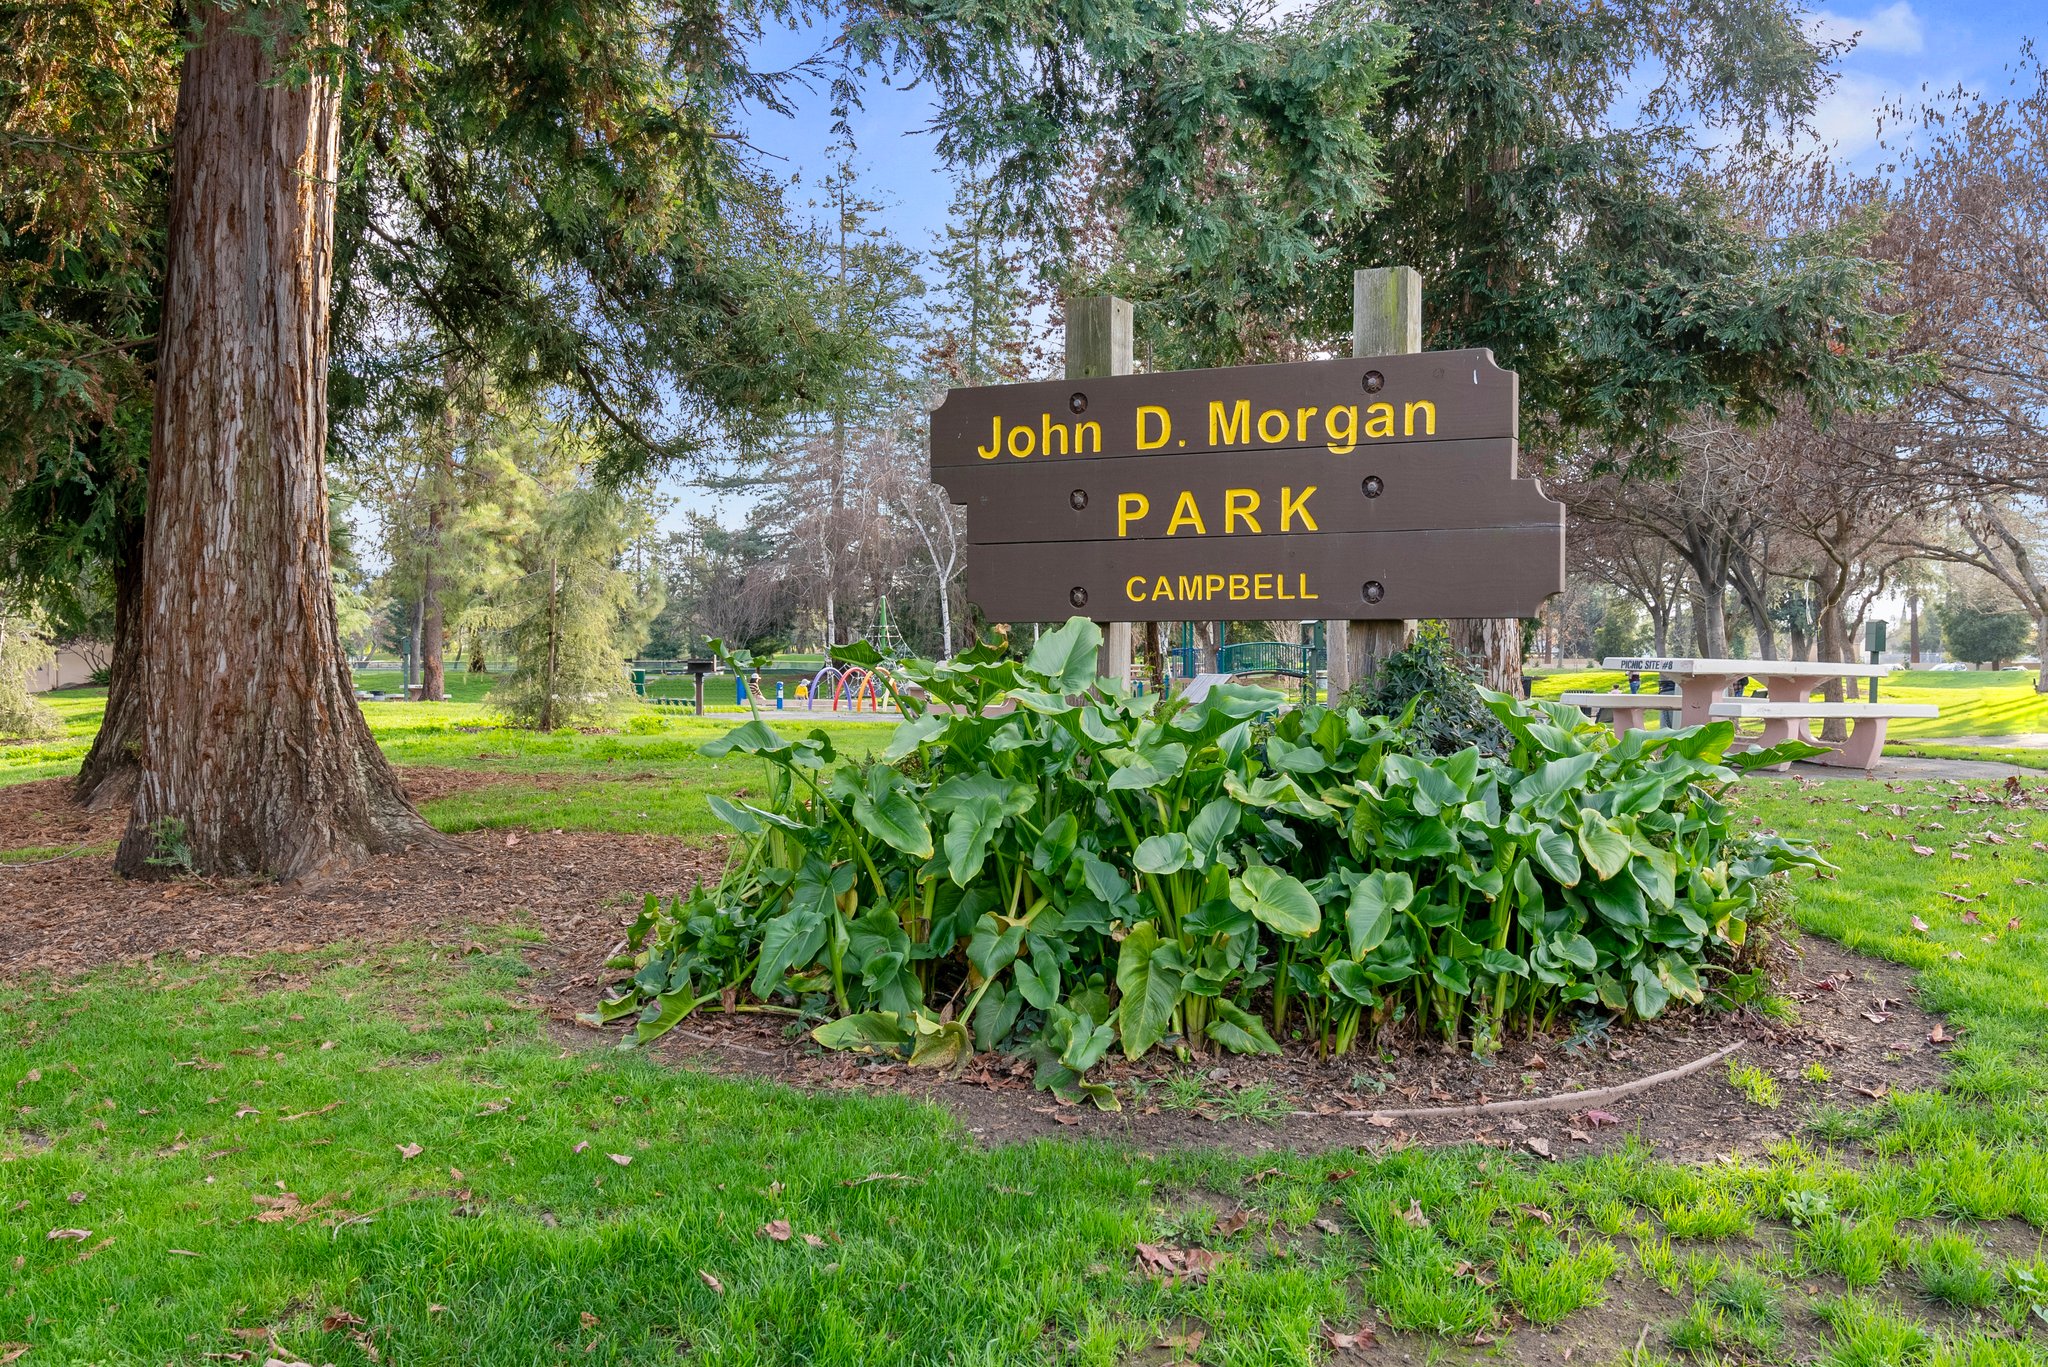 John D. Morgan Park